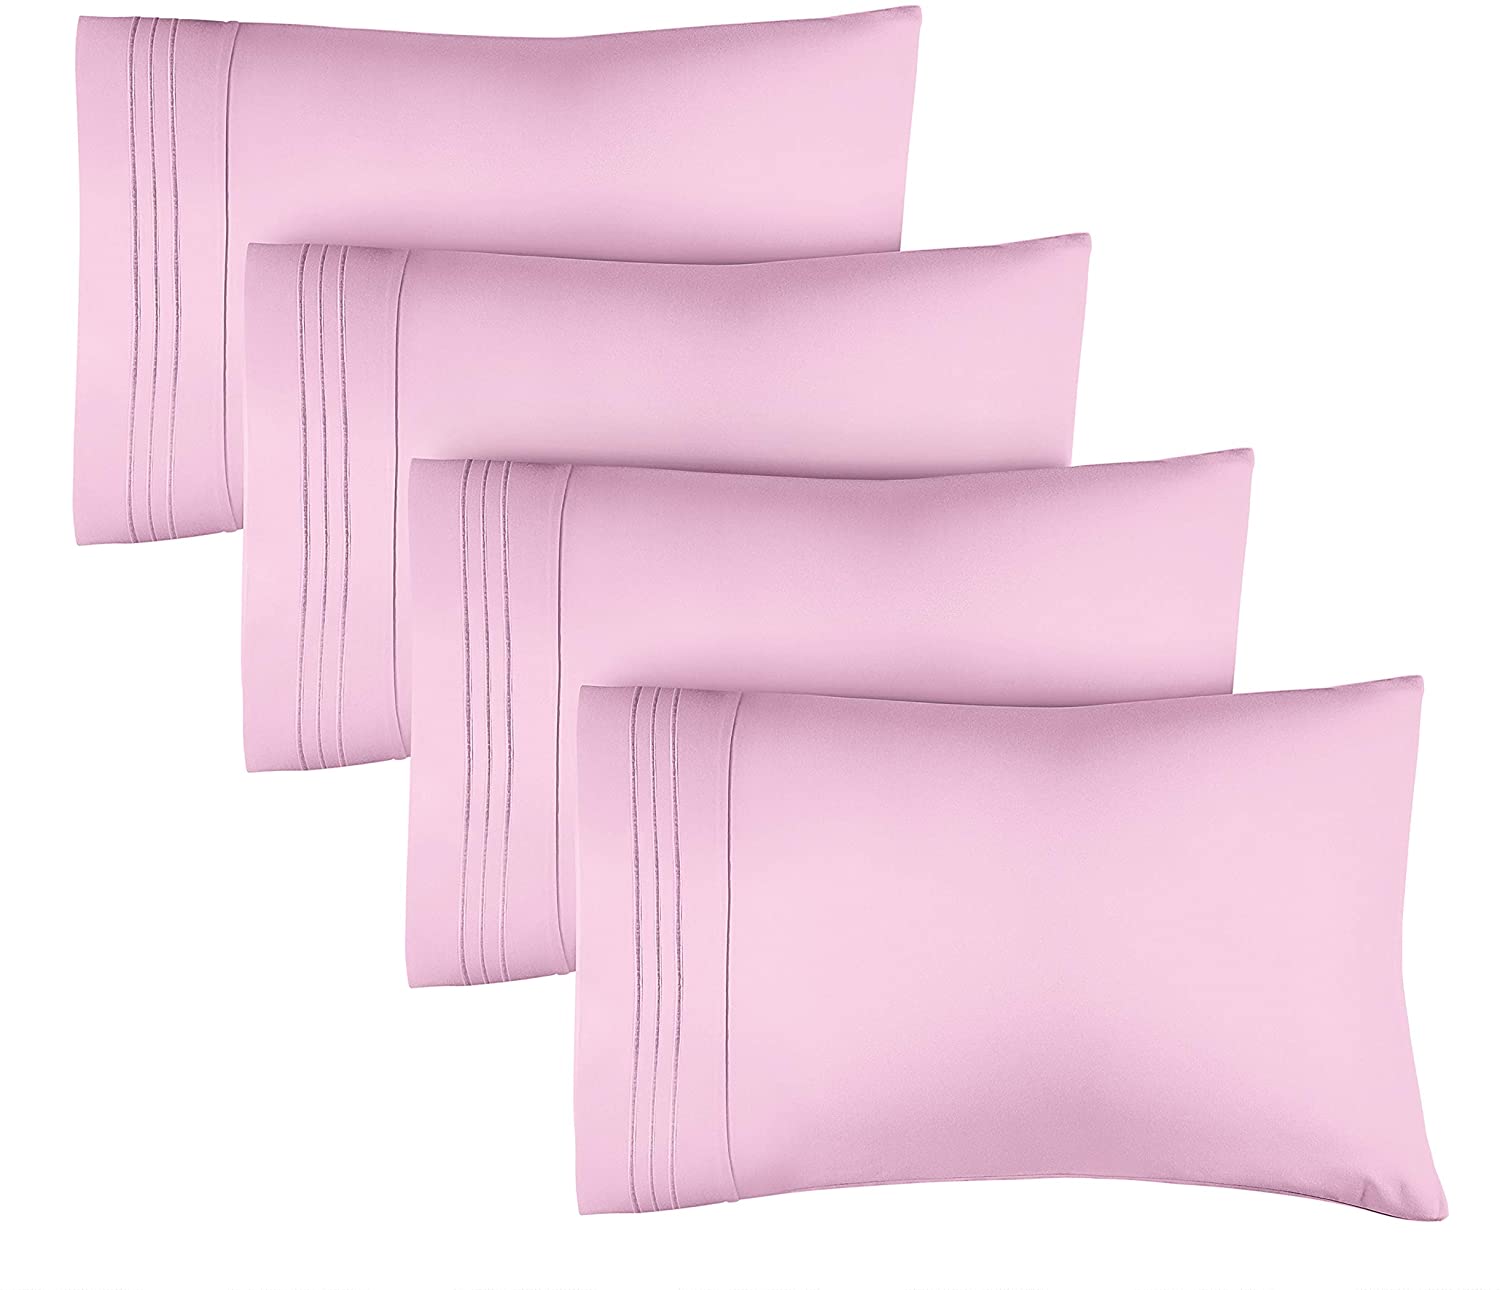 4 Pillowcase Set - Lavender